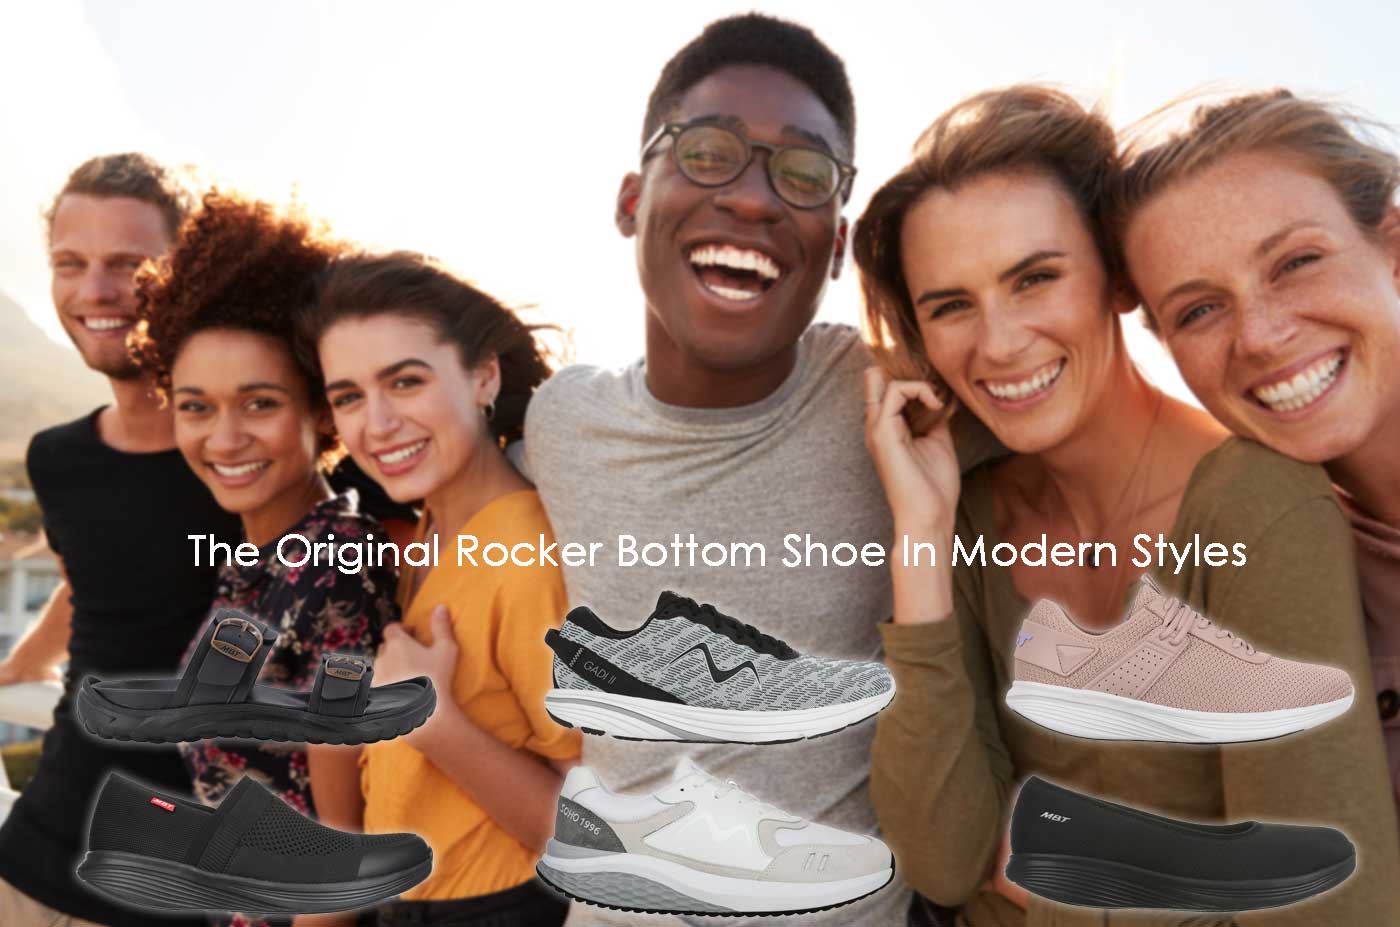 Modern Style Rocker Bottom Shoes